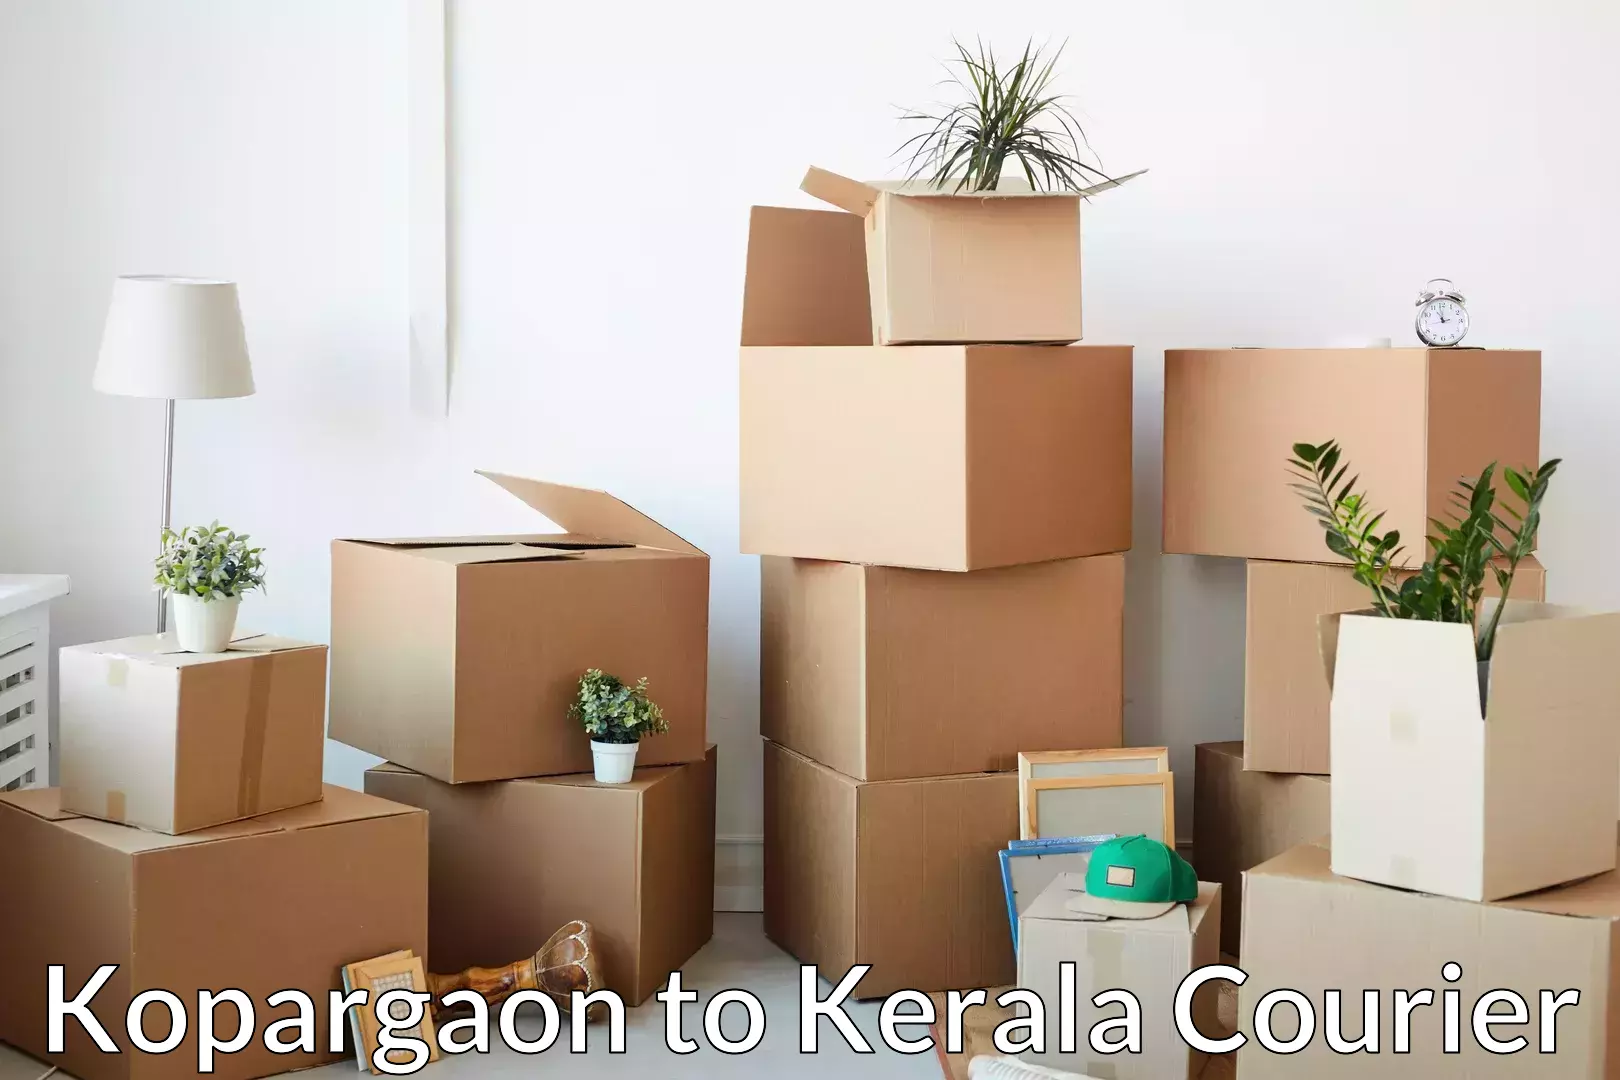 Efficient moving company Kopargaon to Cochin Port Kochi